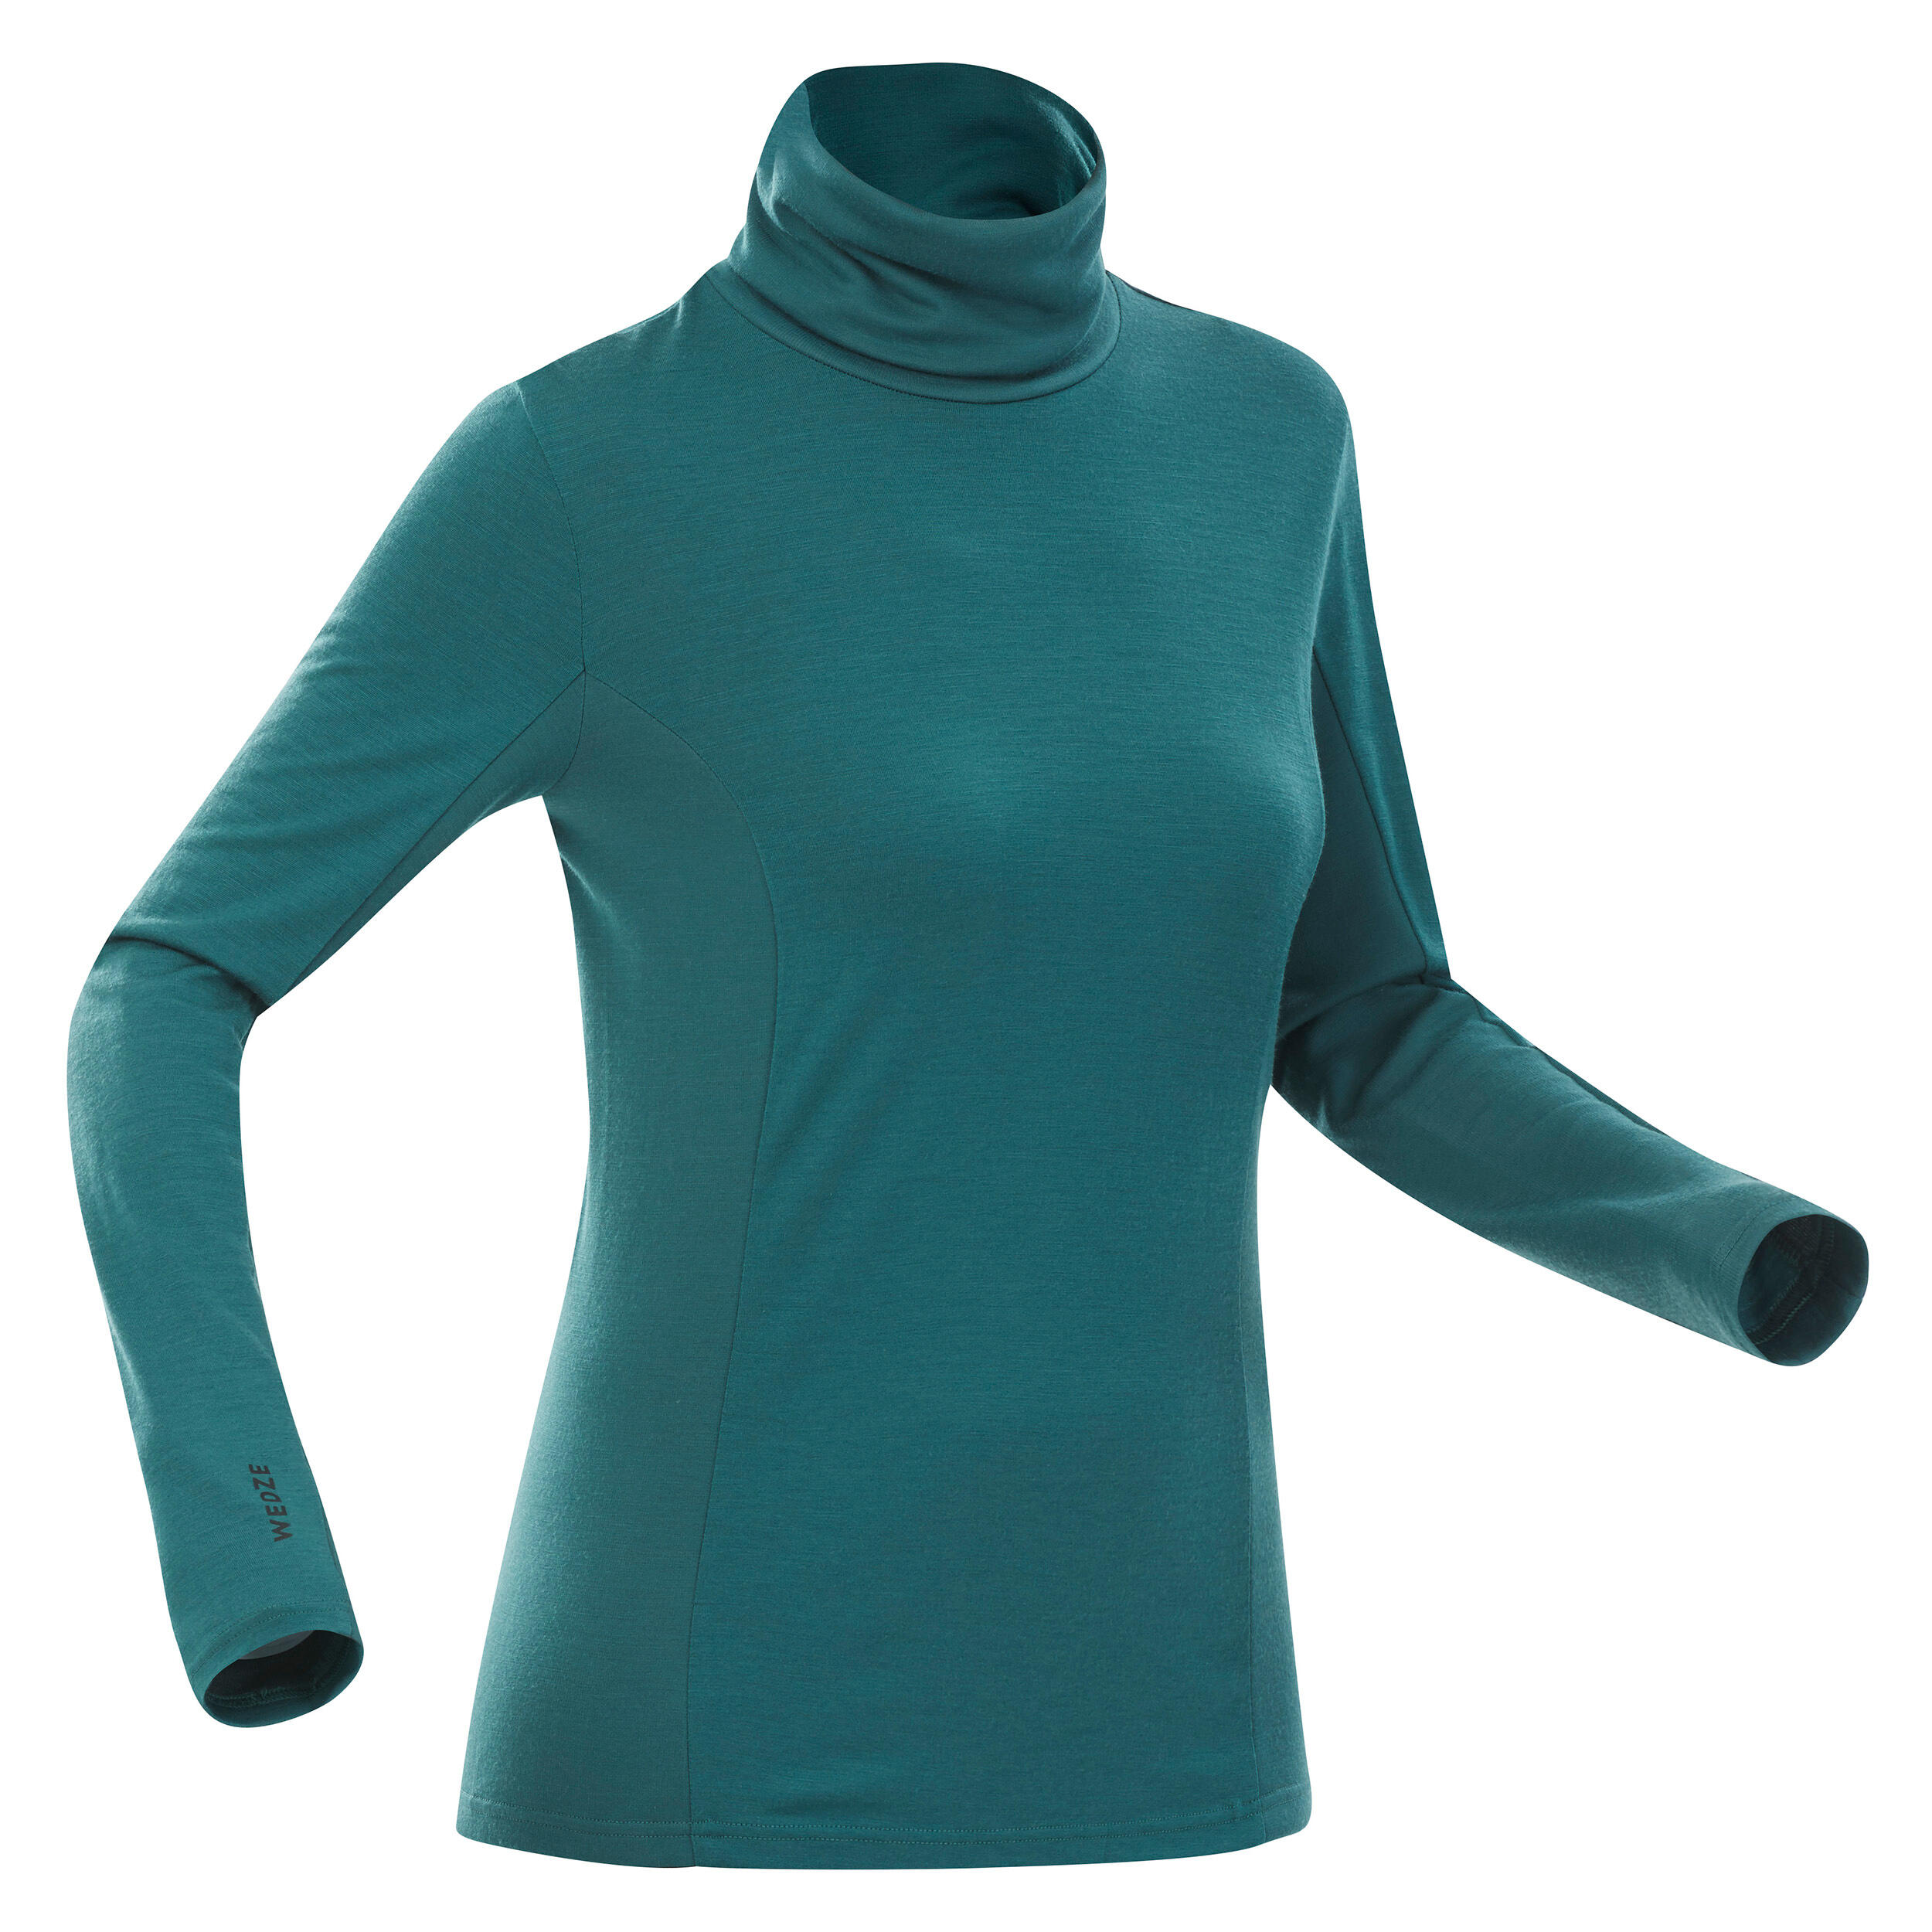 WEDZE Women's Ski Base Layer Top - BL 900 Wool Neck - Turquoise Green